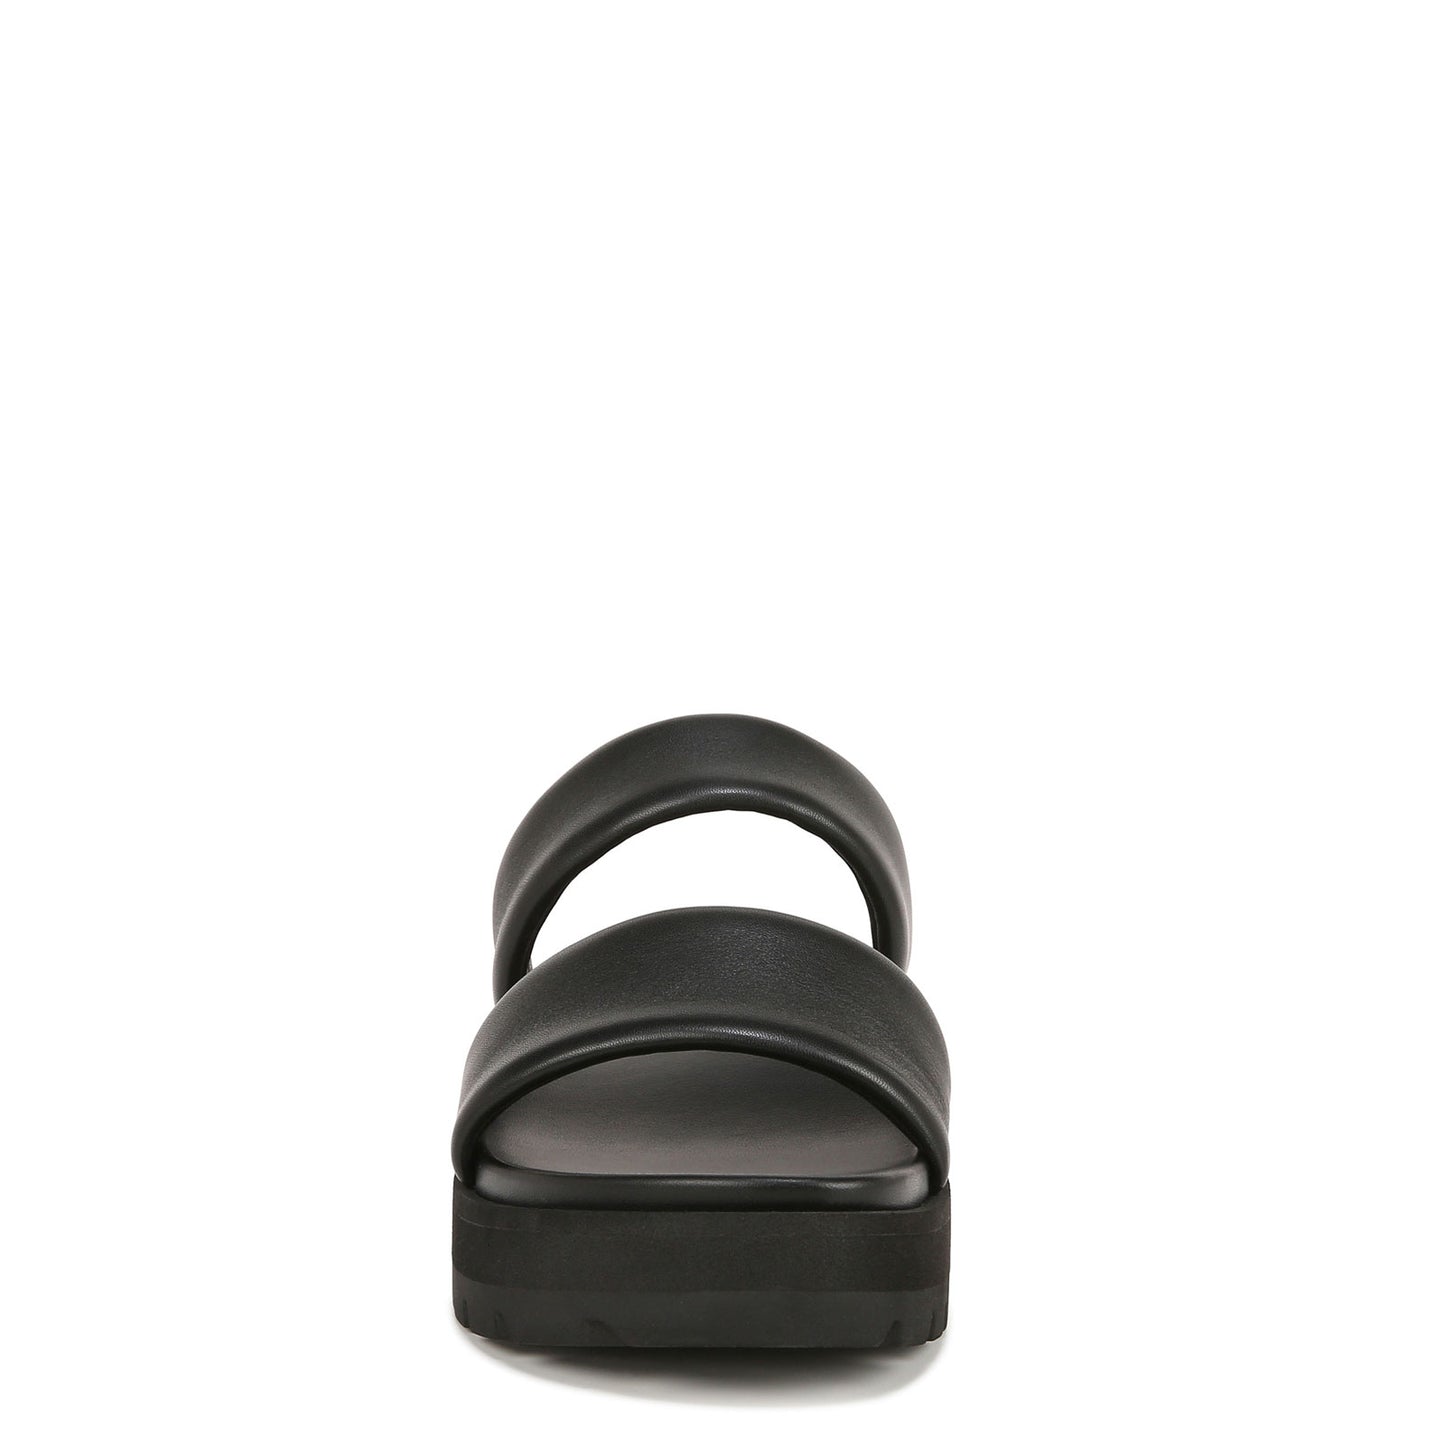 Peltz Shoes  Women's Vionic Modesto Sandal Black Nappa Leather I7858L1001